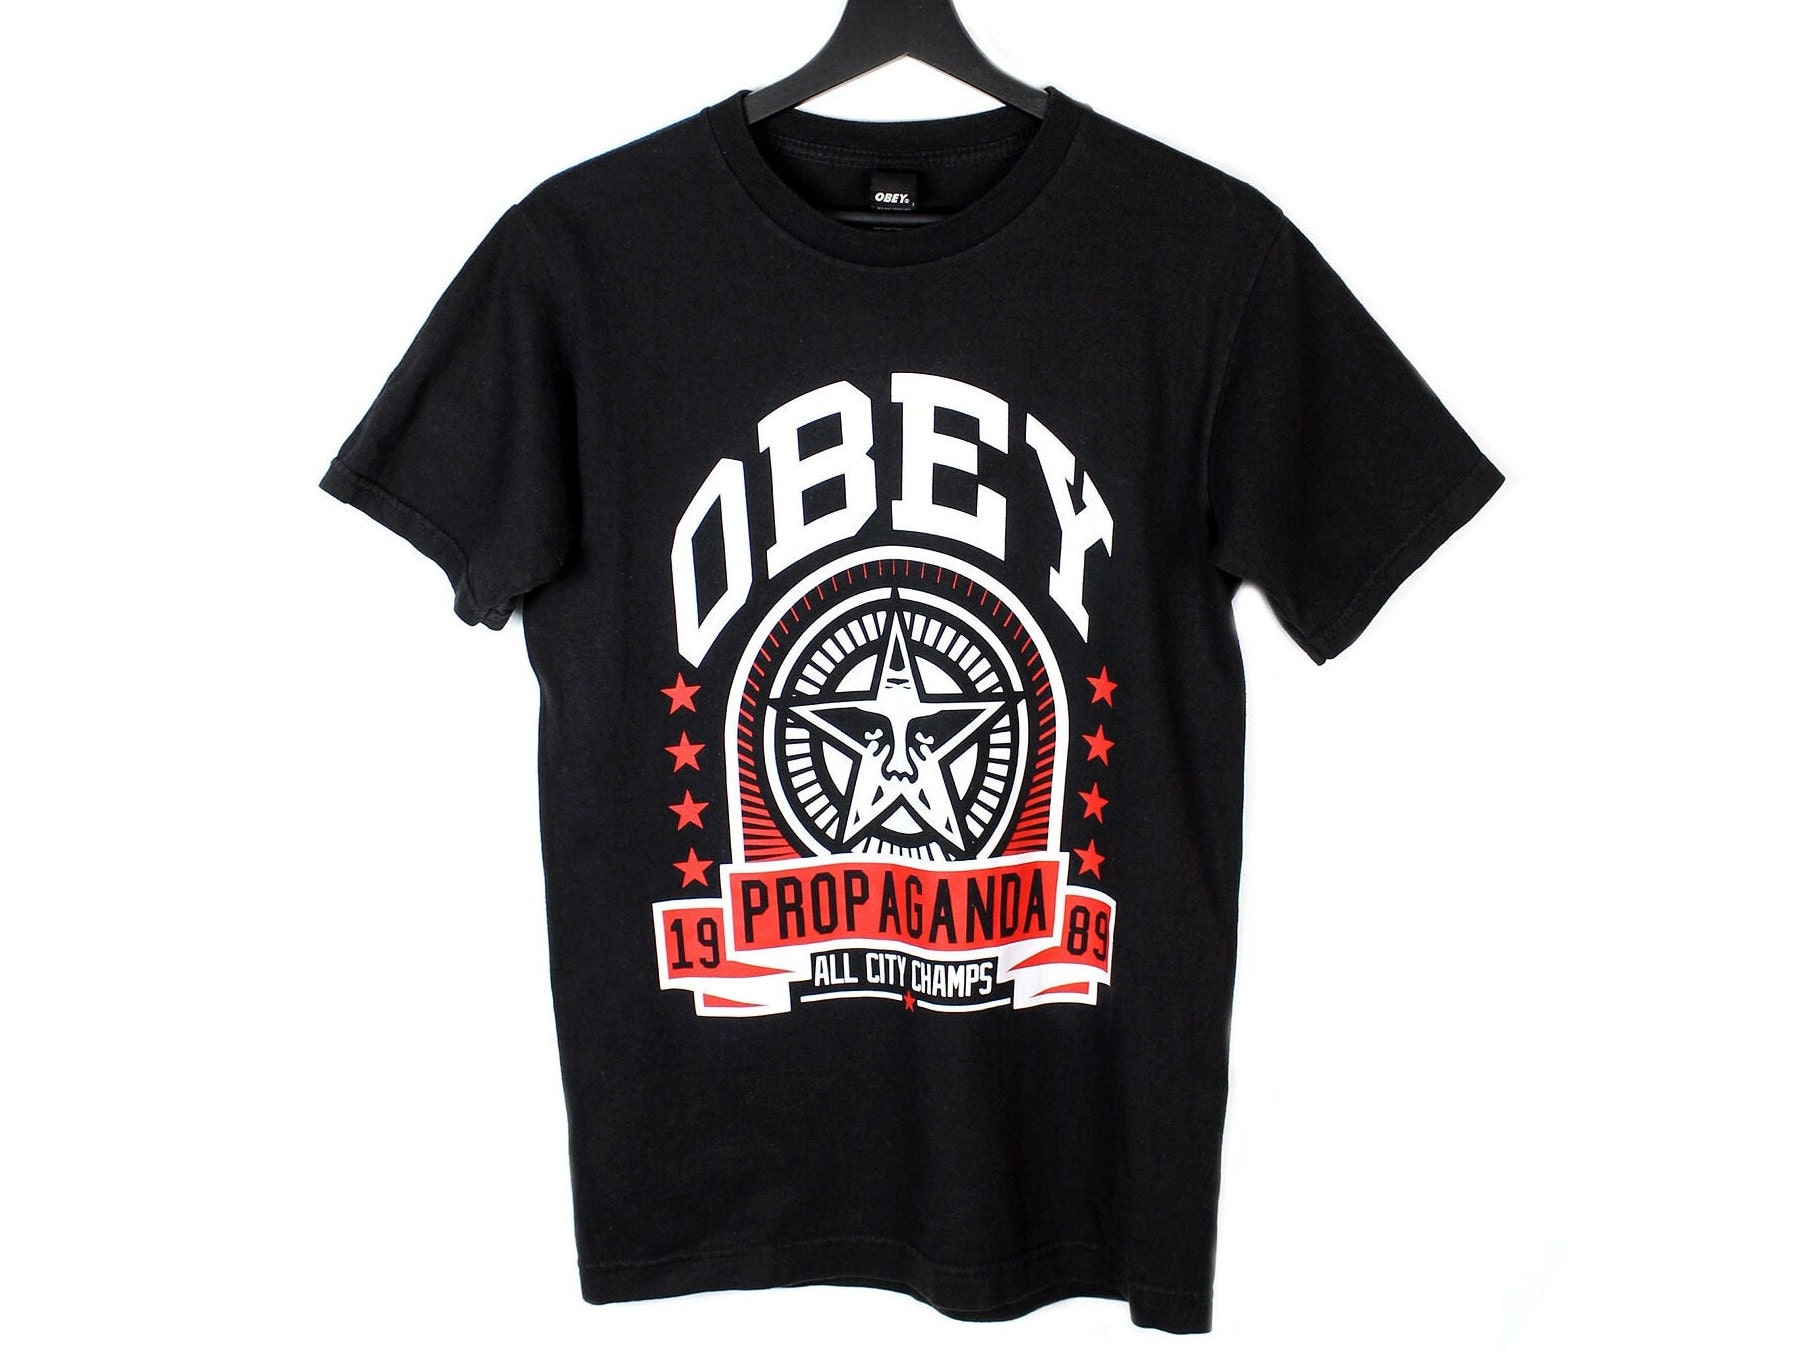 Y2k OBEY Propaganda All City Champs 1989 T-shirt Shirt / - Etsy